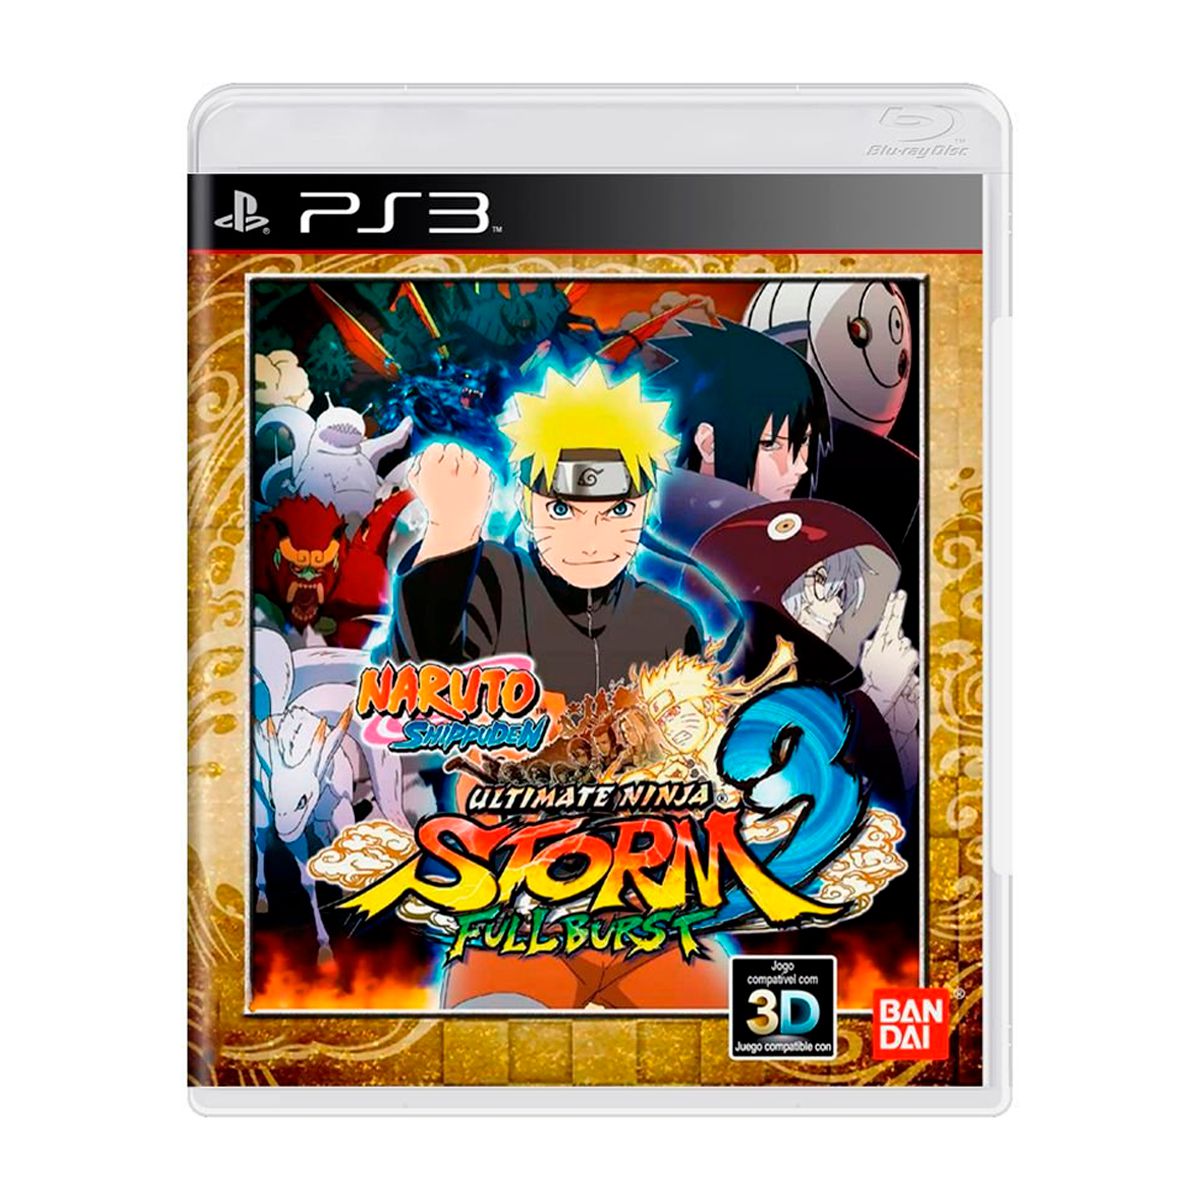 Xbox 360 - Naruto Shippuden: Ultimate 3 Full Burst Bandai Namco